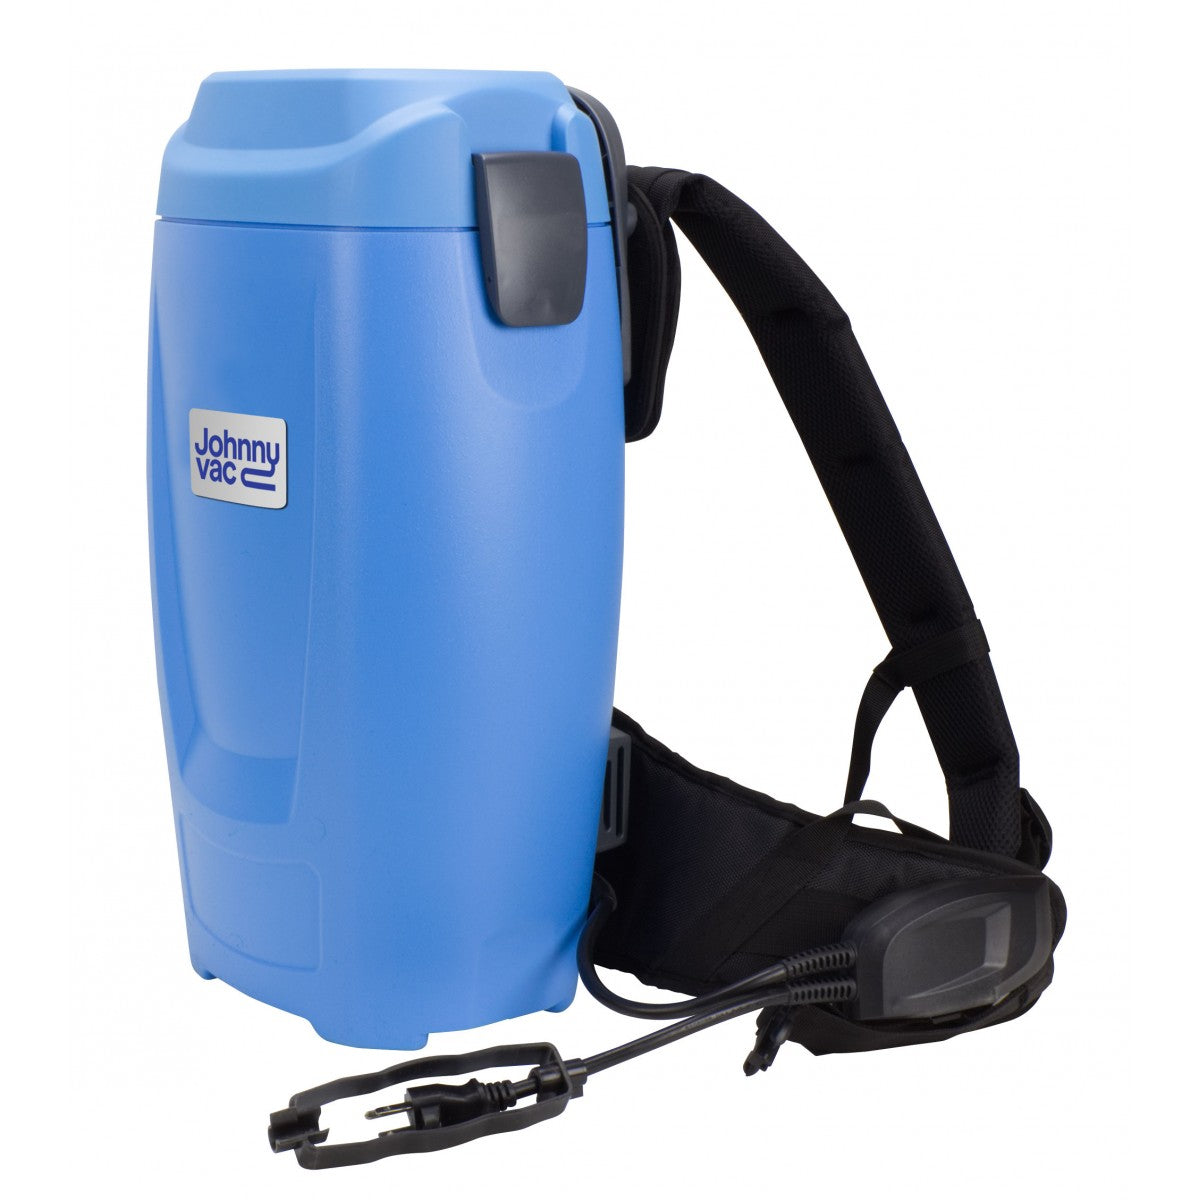 Backpack vacuum - Johnny vac 1.5 gallon